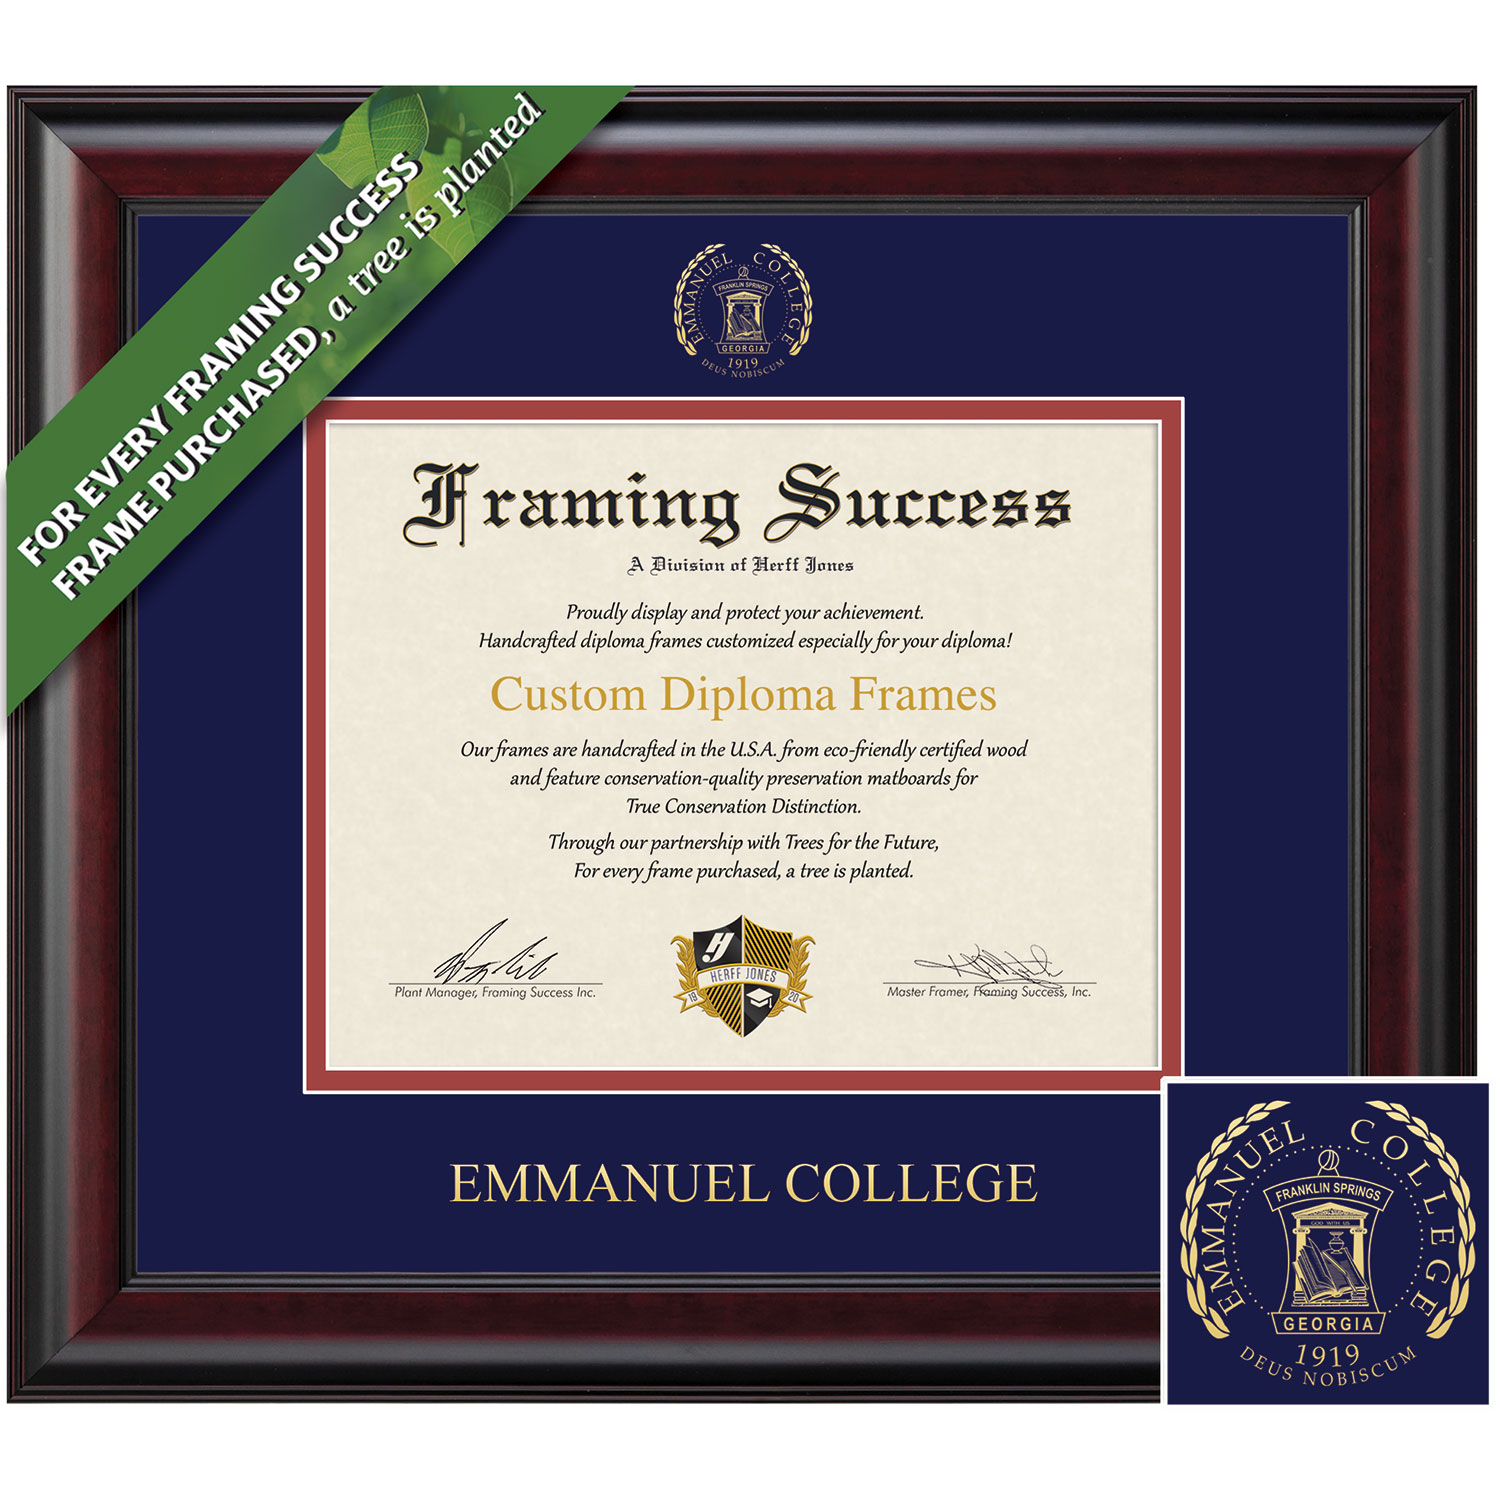 Framing Success 8.5 x 11 Classic Gold Embossed School Seal Associates, Bachelors Diploma Frame